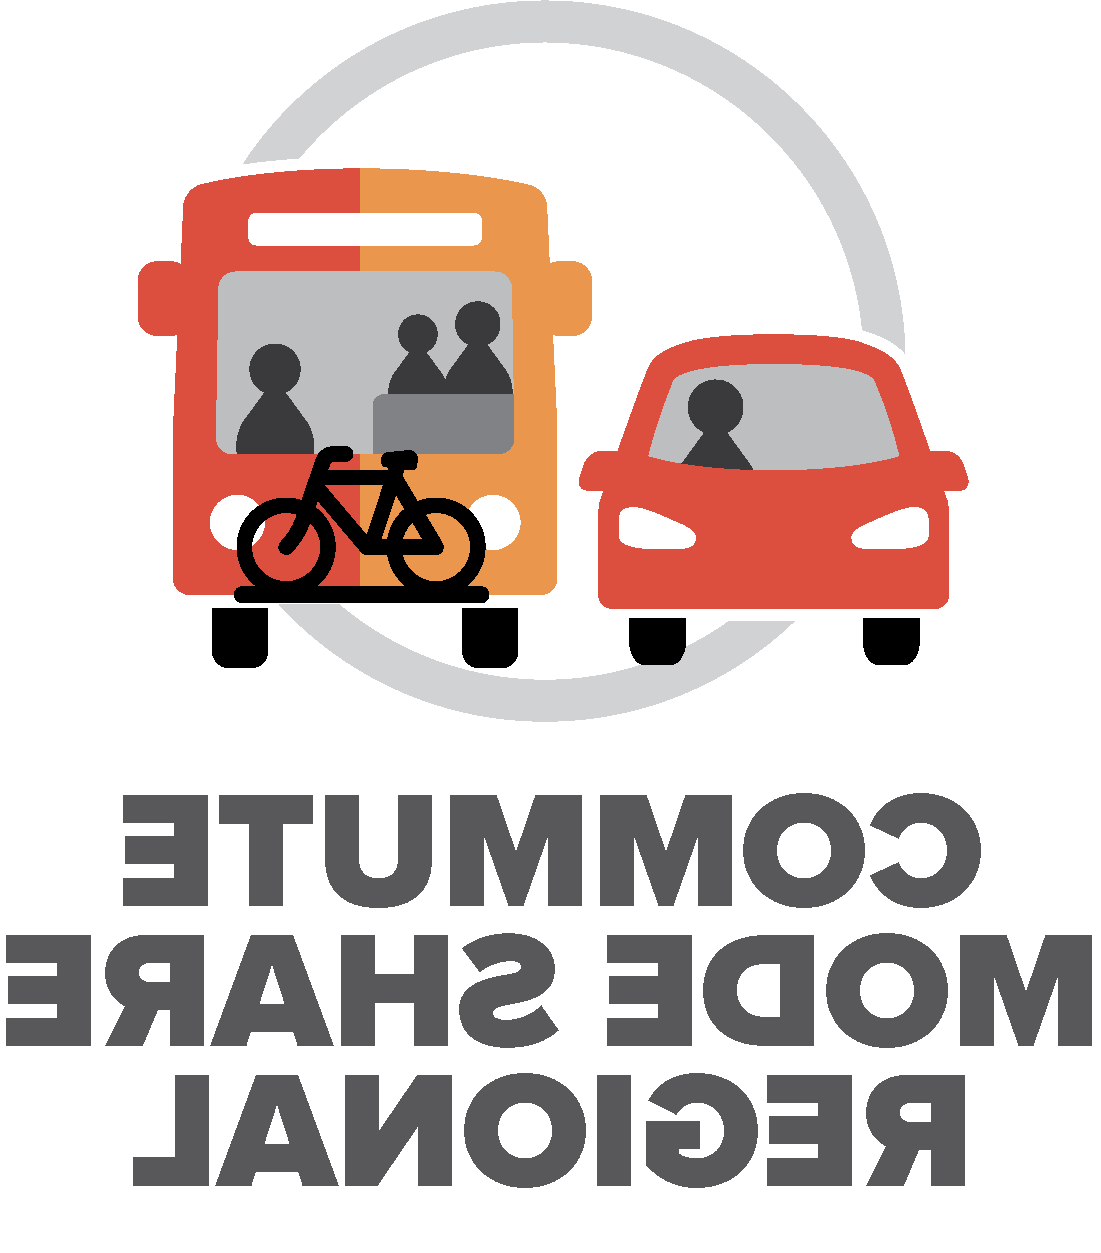 commute mode share regional